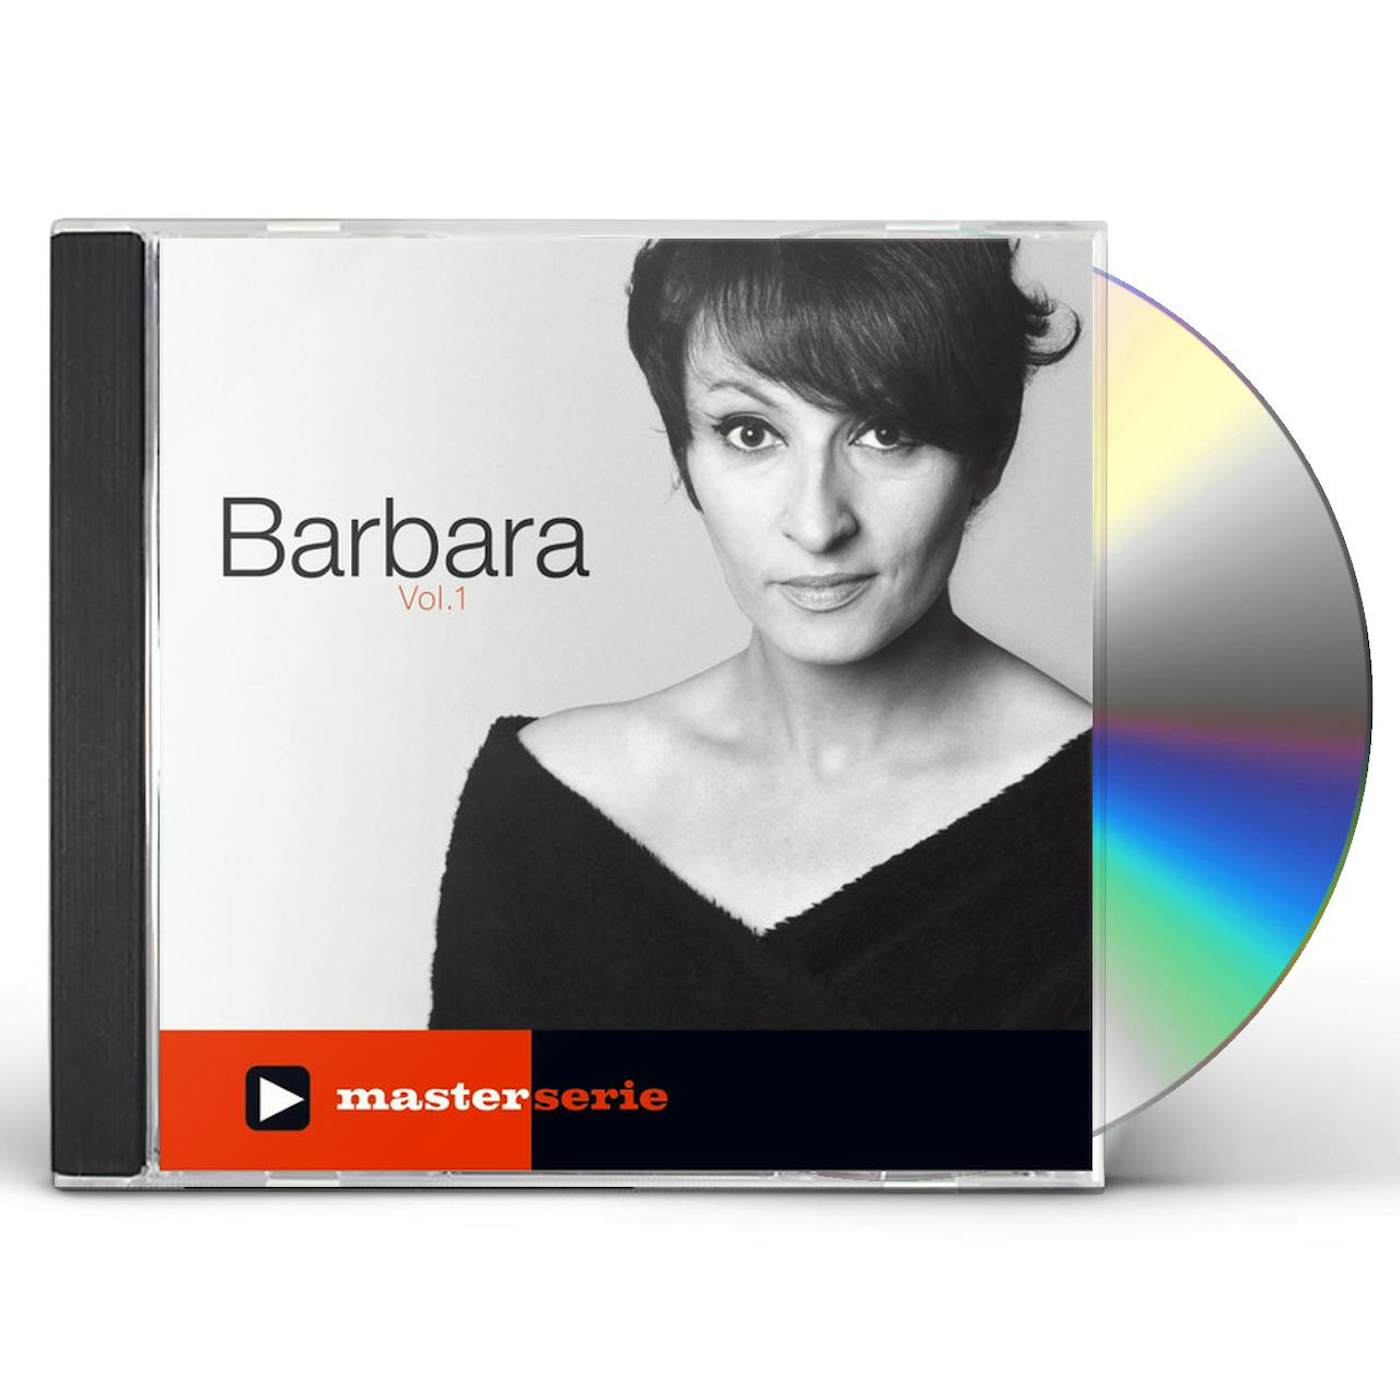 Barbara MASTER SERIE VOL.1 CD